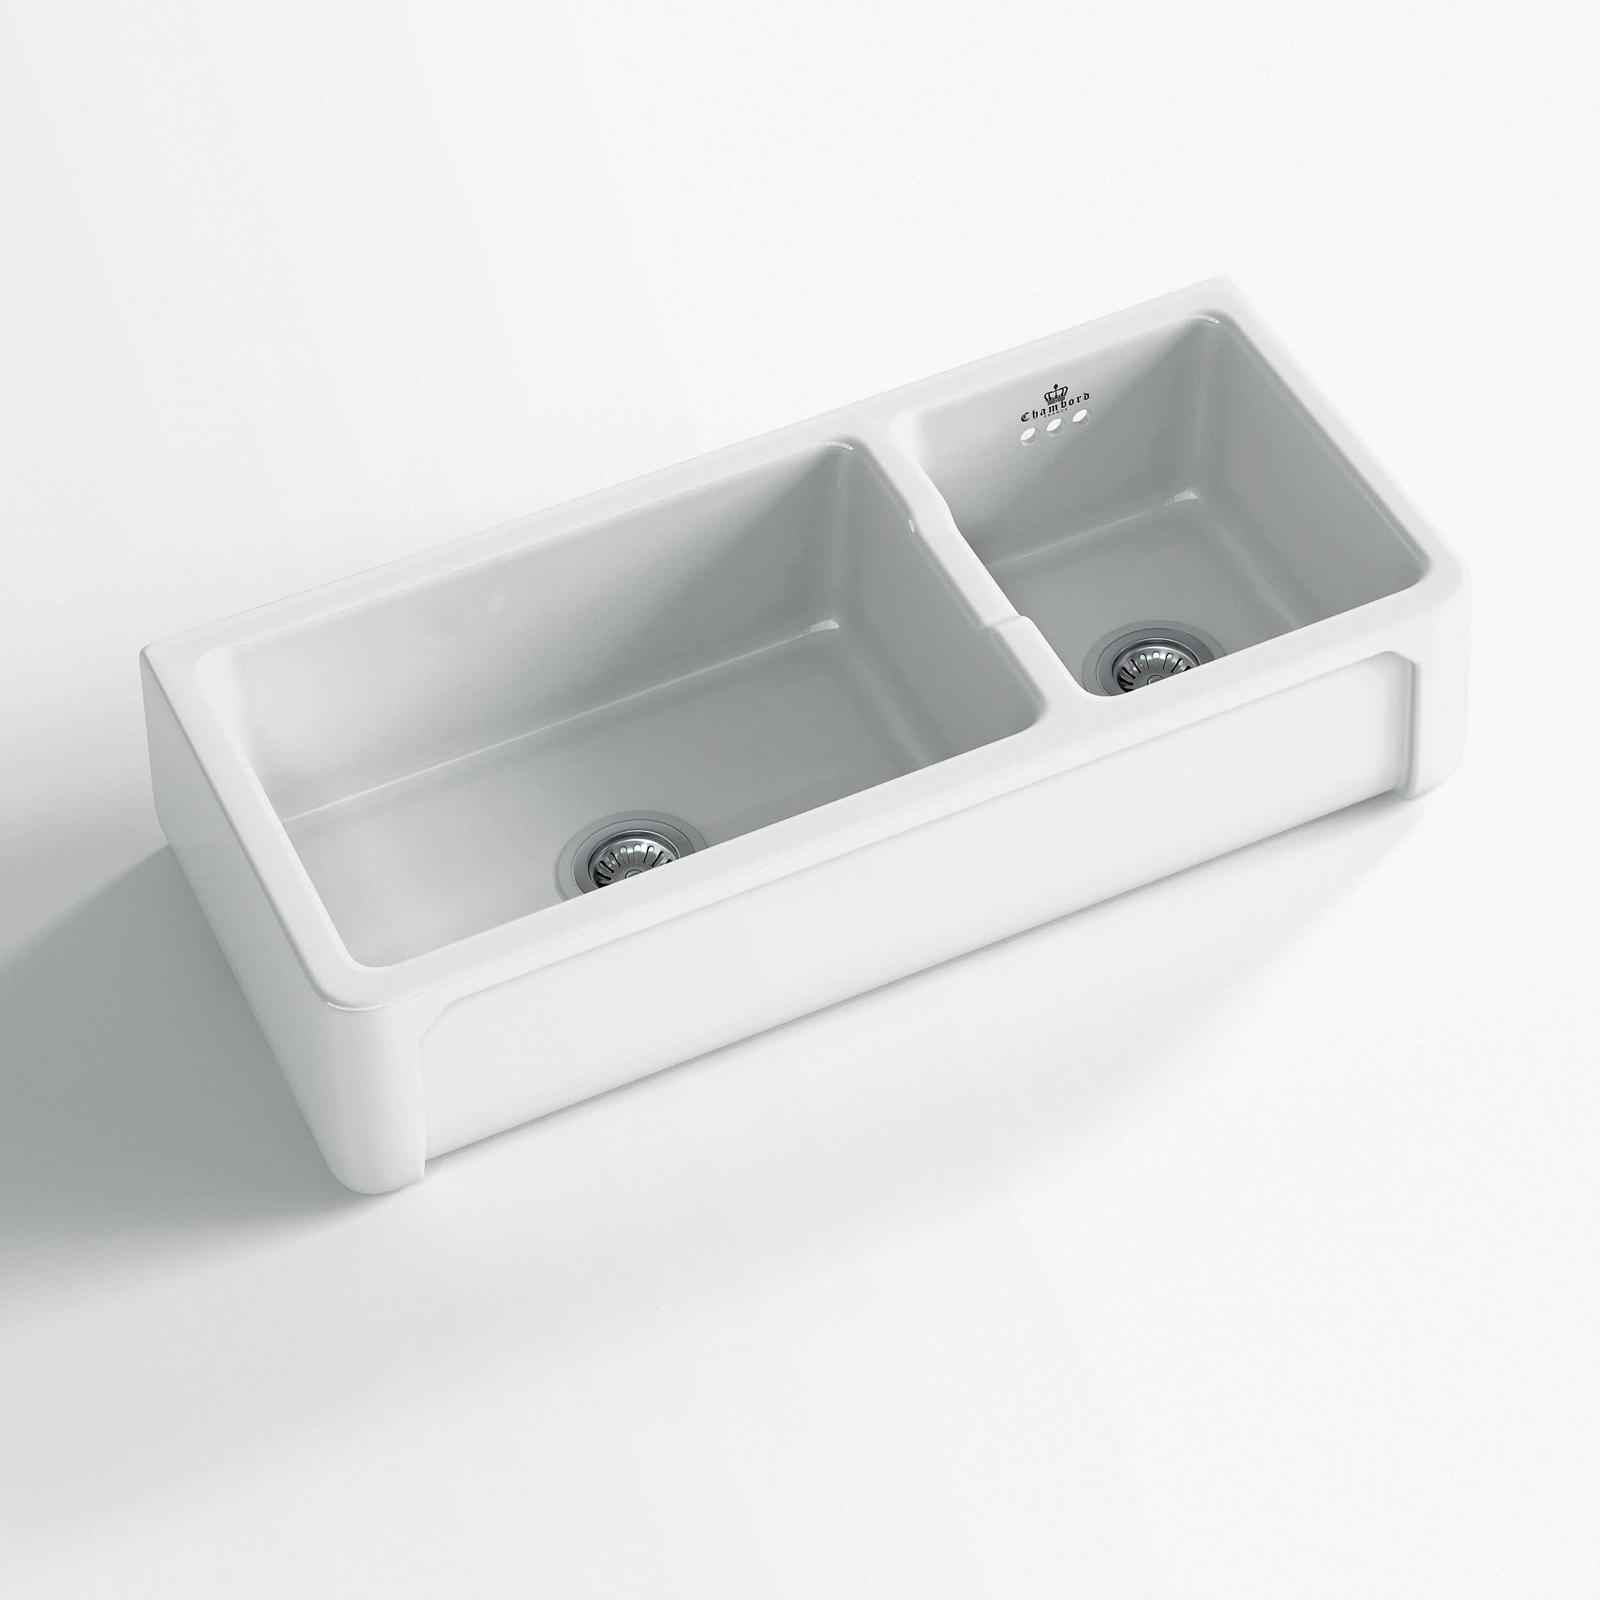 High-quality sink Henri III - one and a half bowl, ceramic